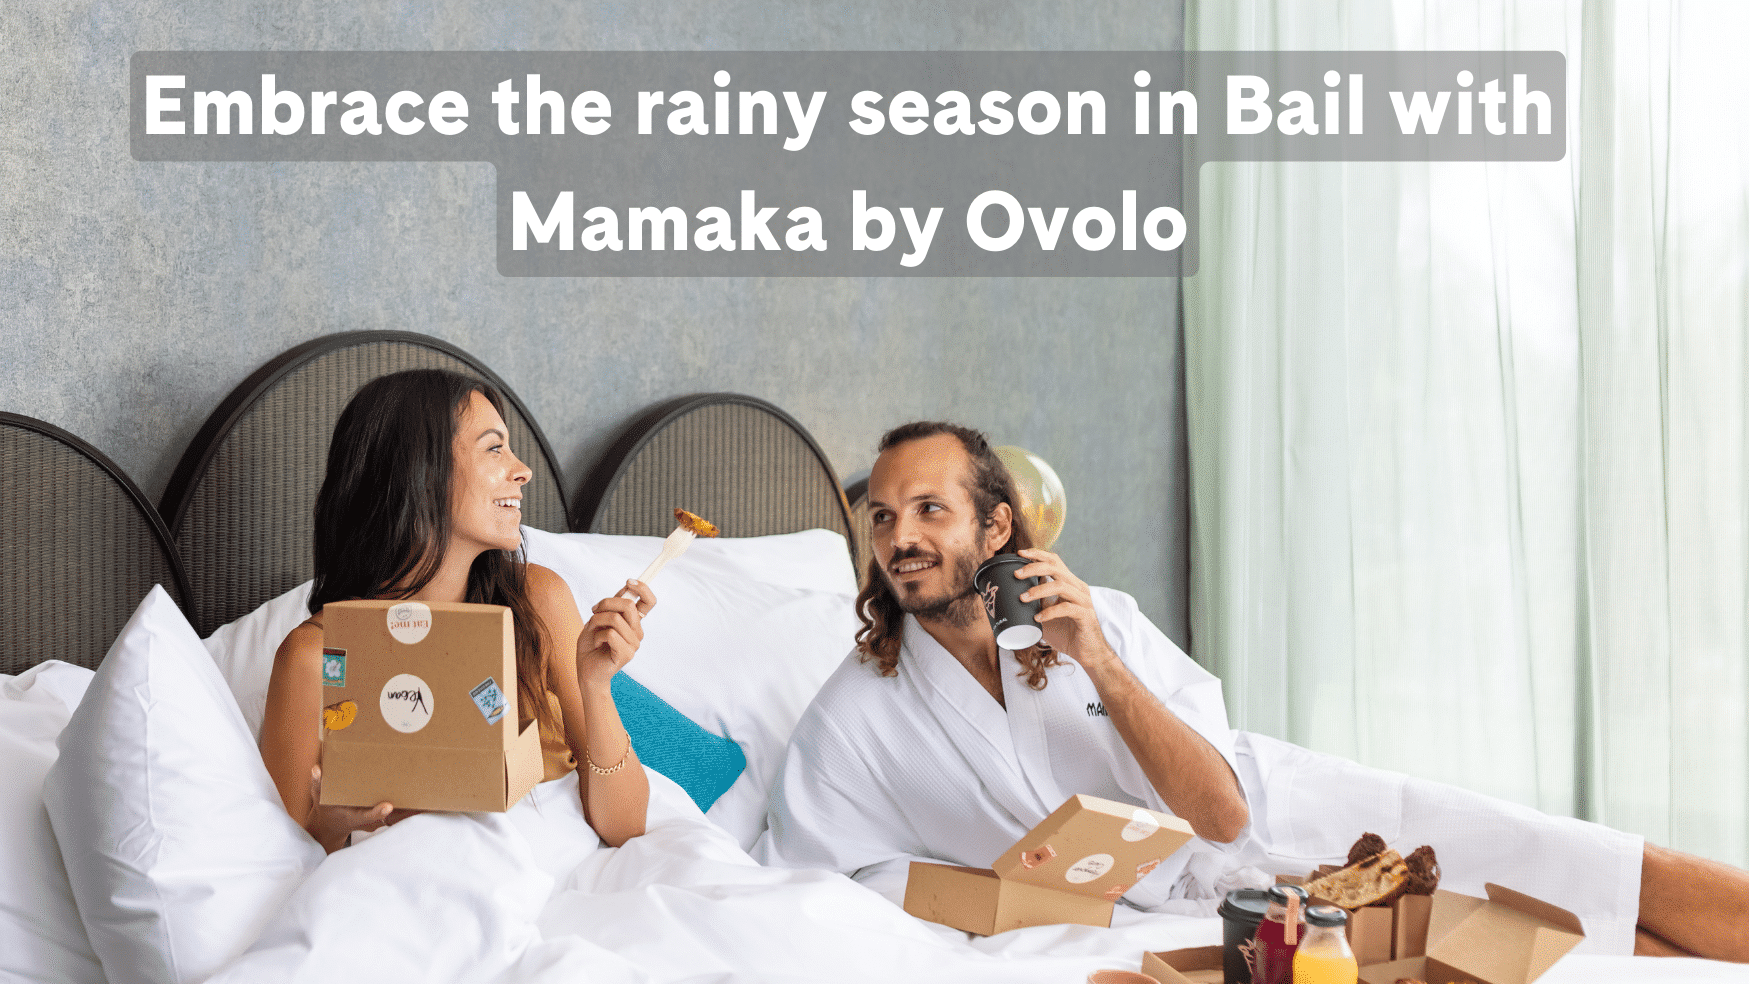 MAMAKA Embrace the rainy season in Bali with MAMAKA by Ovolo